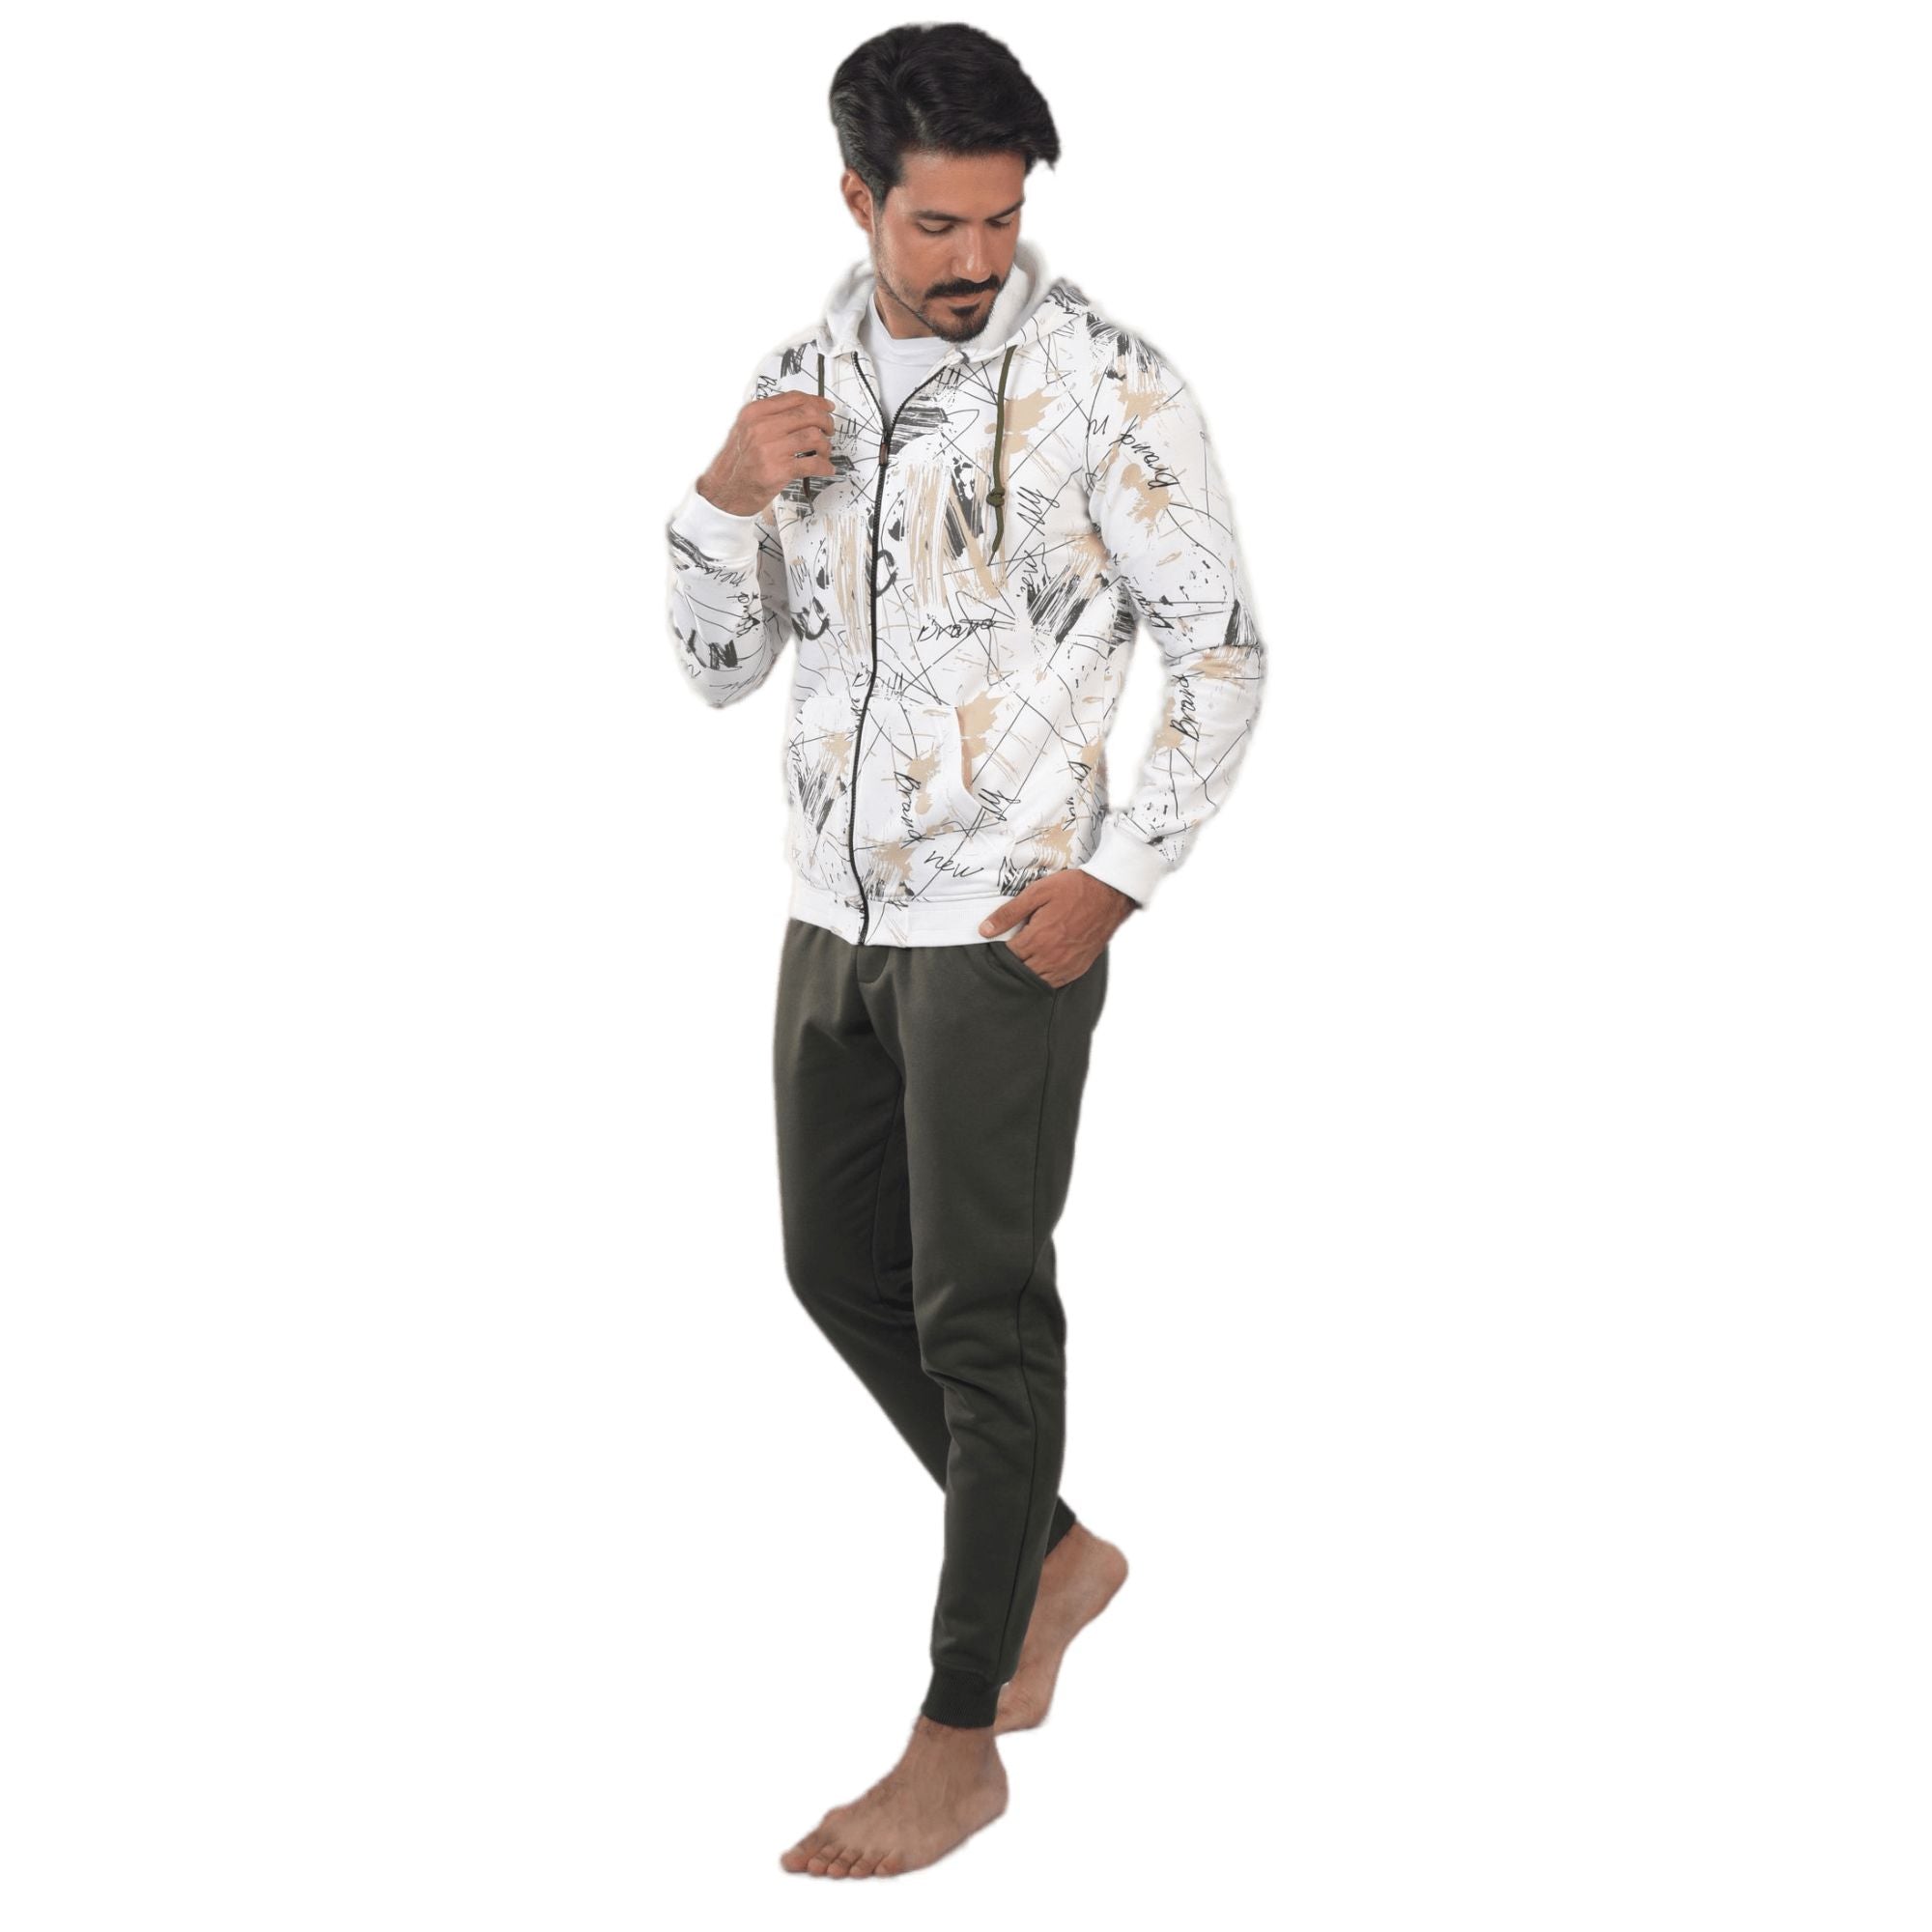 Men's Digitally Printed Winter Pajama Set - Off-white Hoodie and Green Sweatpants.